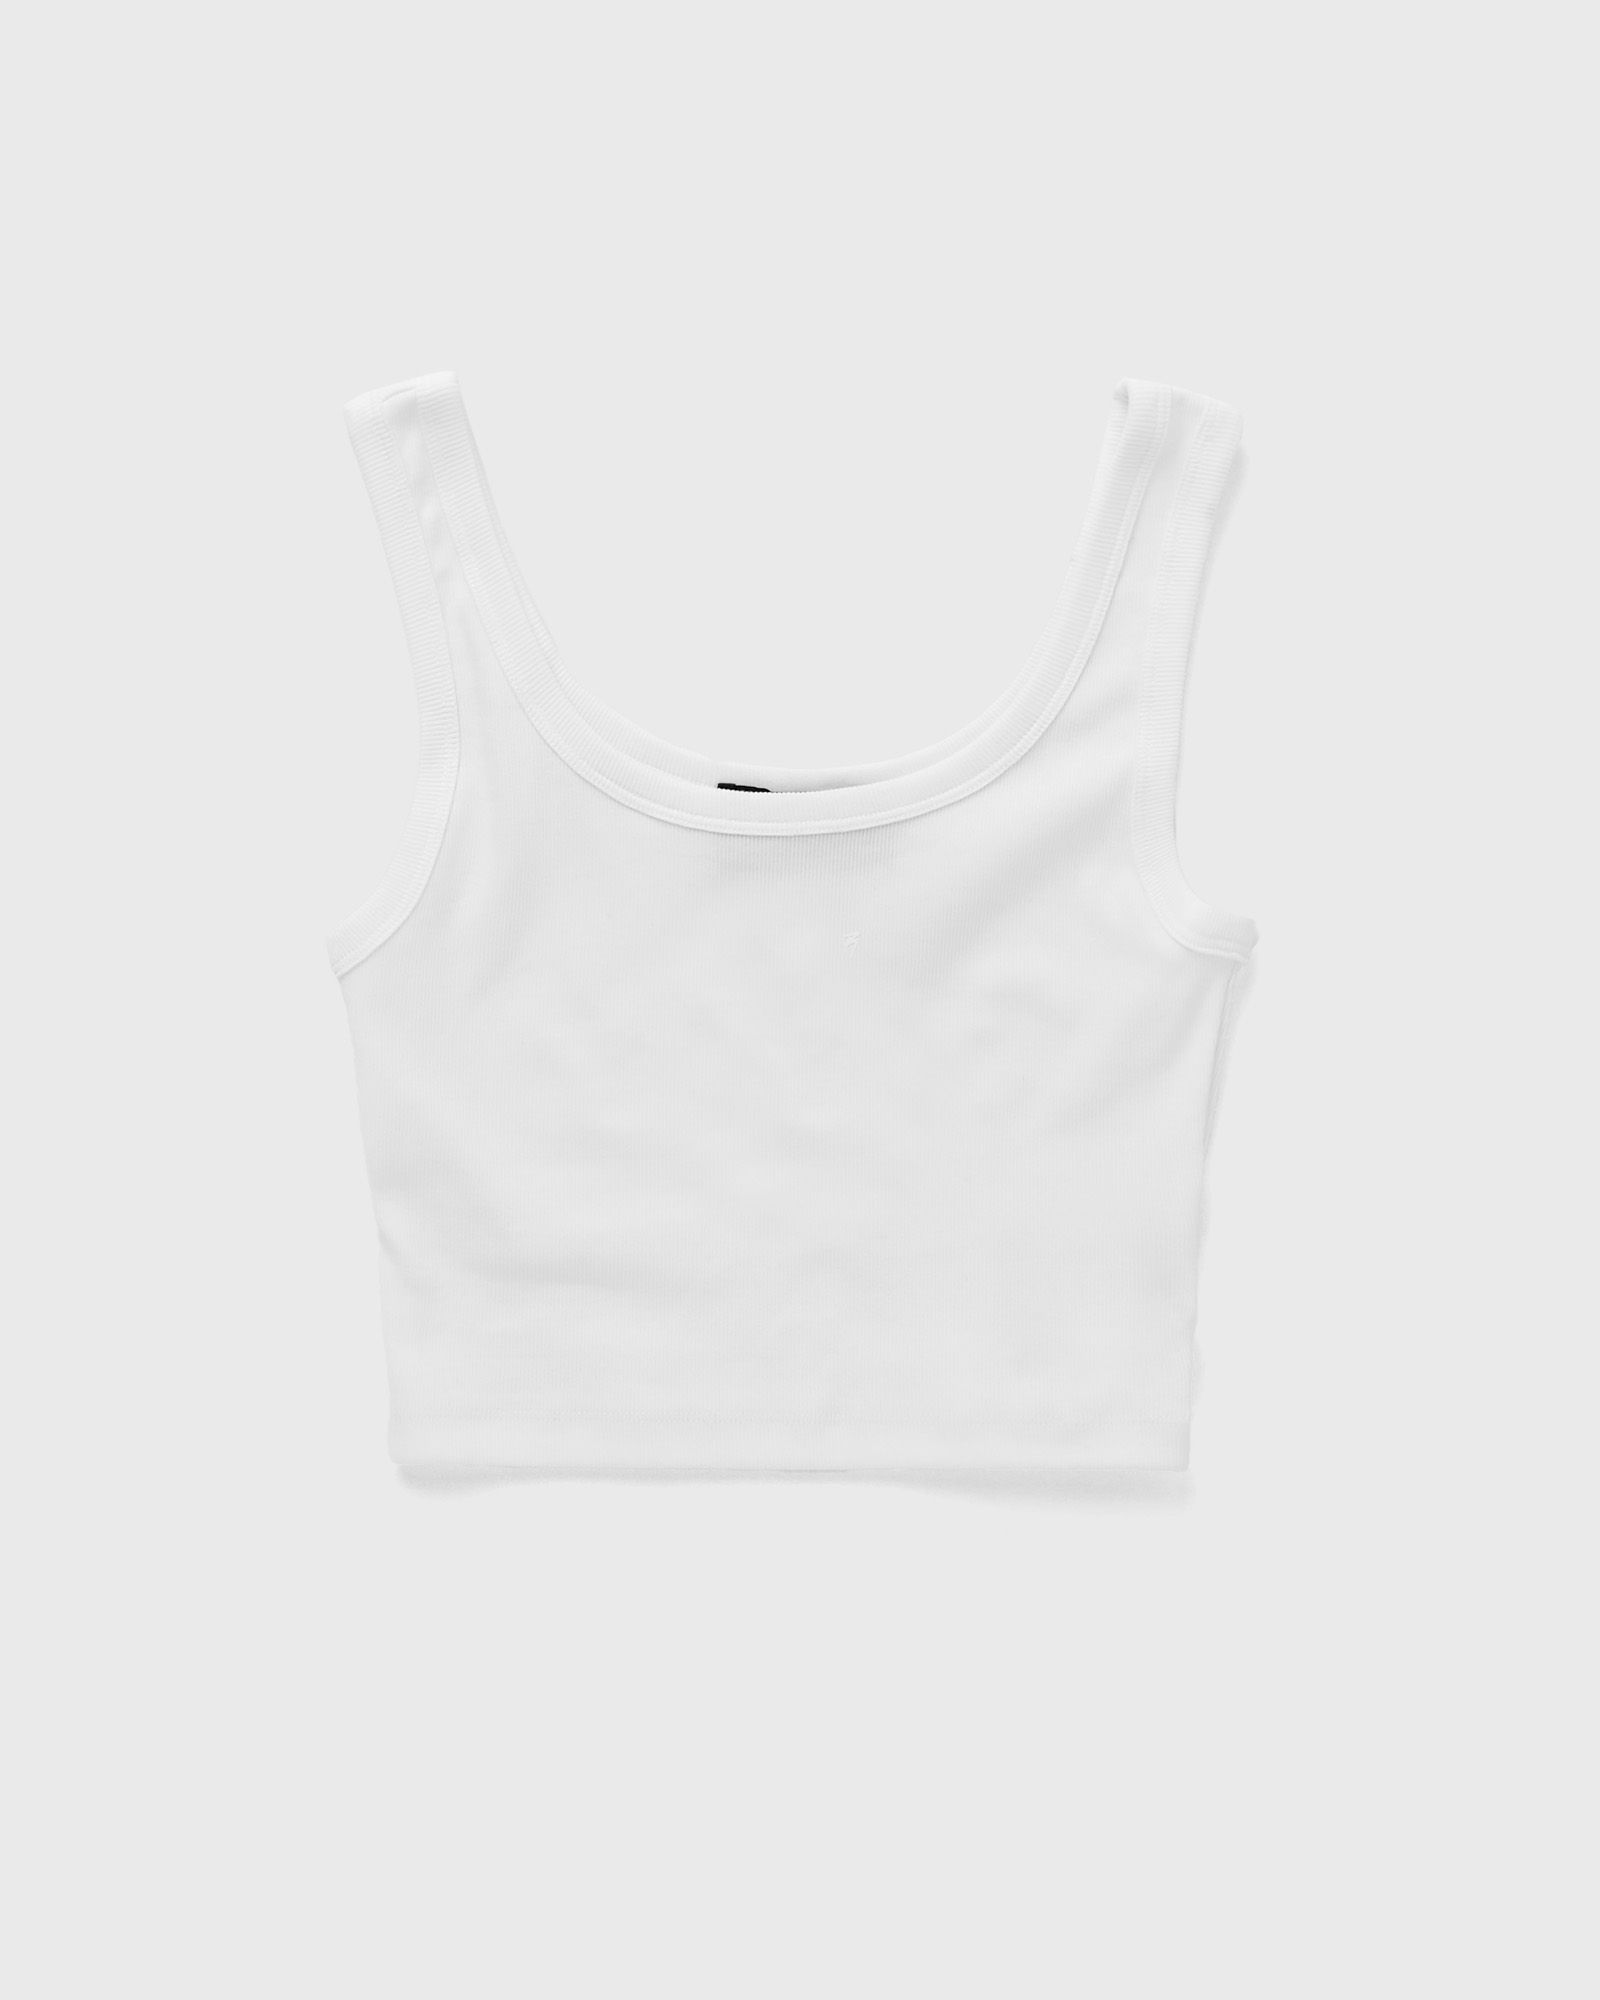 Jordan - x j balvin sp women's tank t-shirt women tops & tanks white in größe:xl